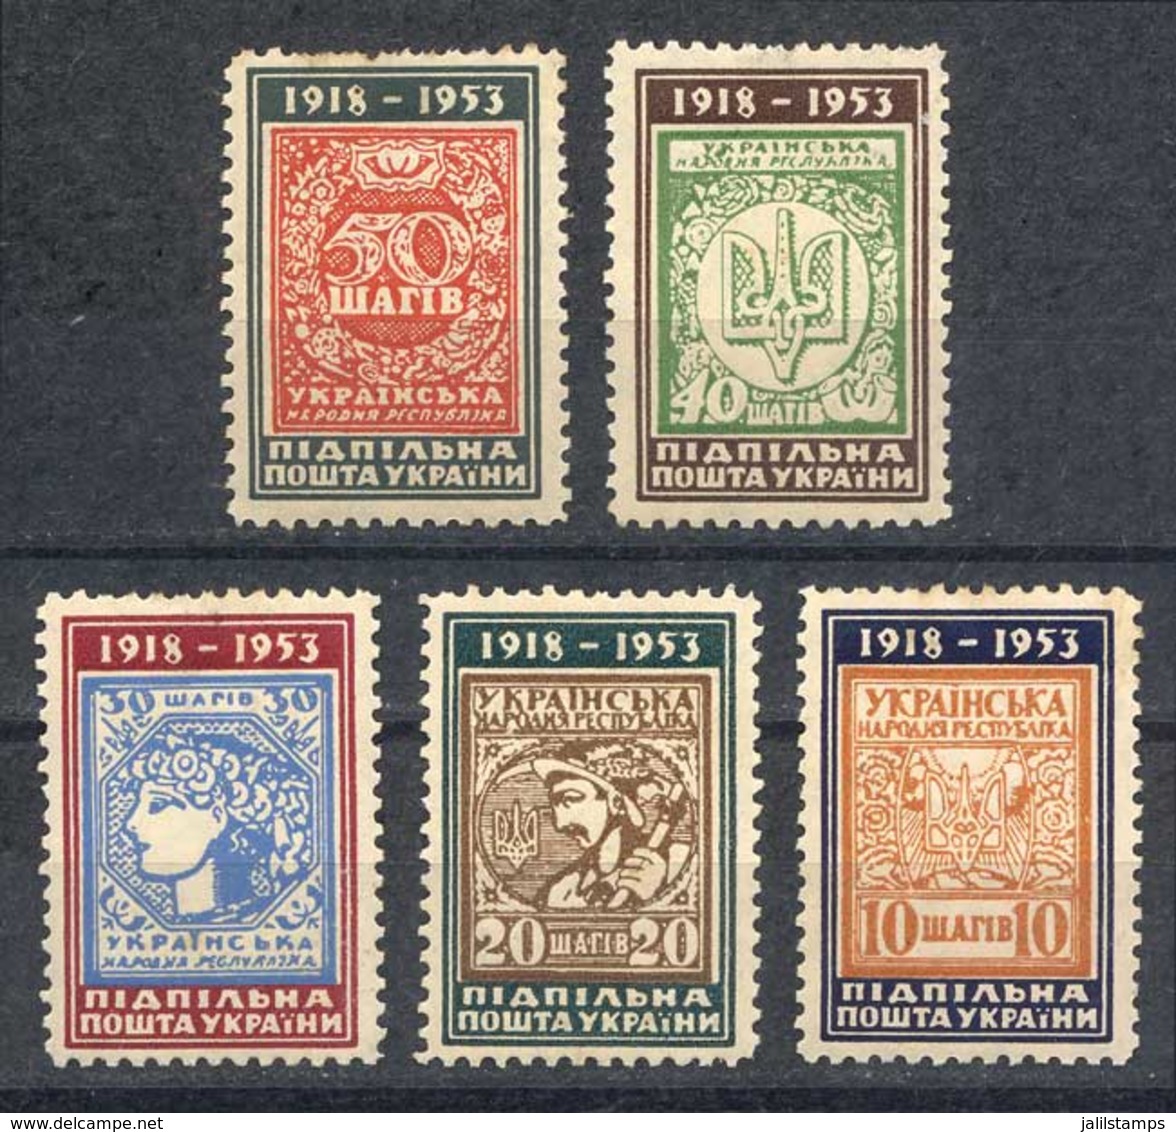 UKRAINE: Year 1953, Set Of 5 Cinderellas Reproducing Old Stamps, Very Nice! - Vignetten (Erinnophilie)